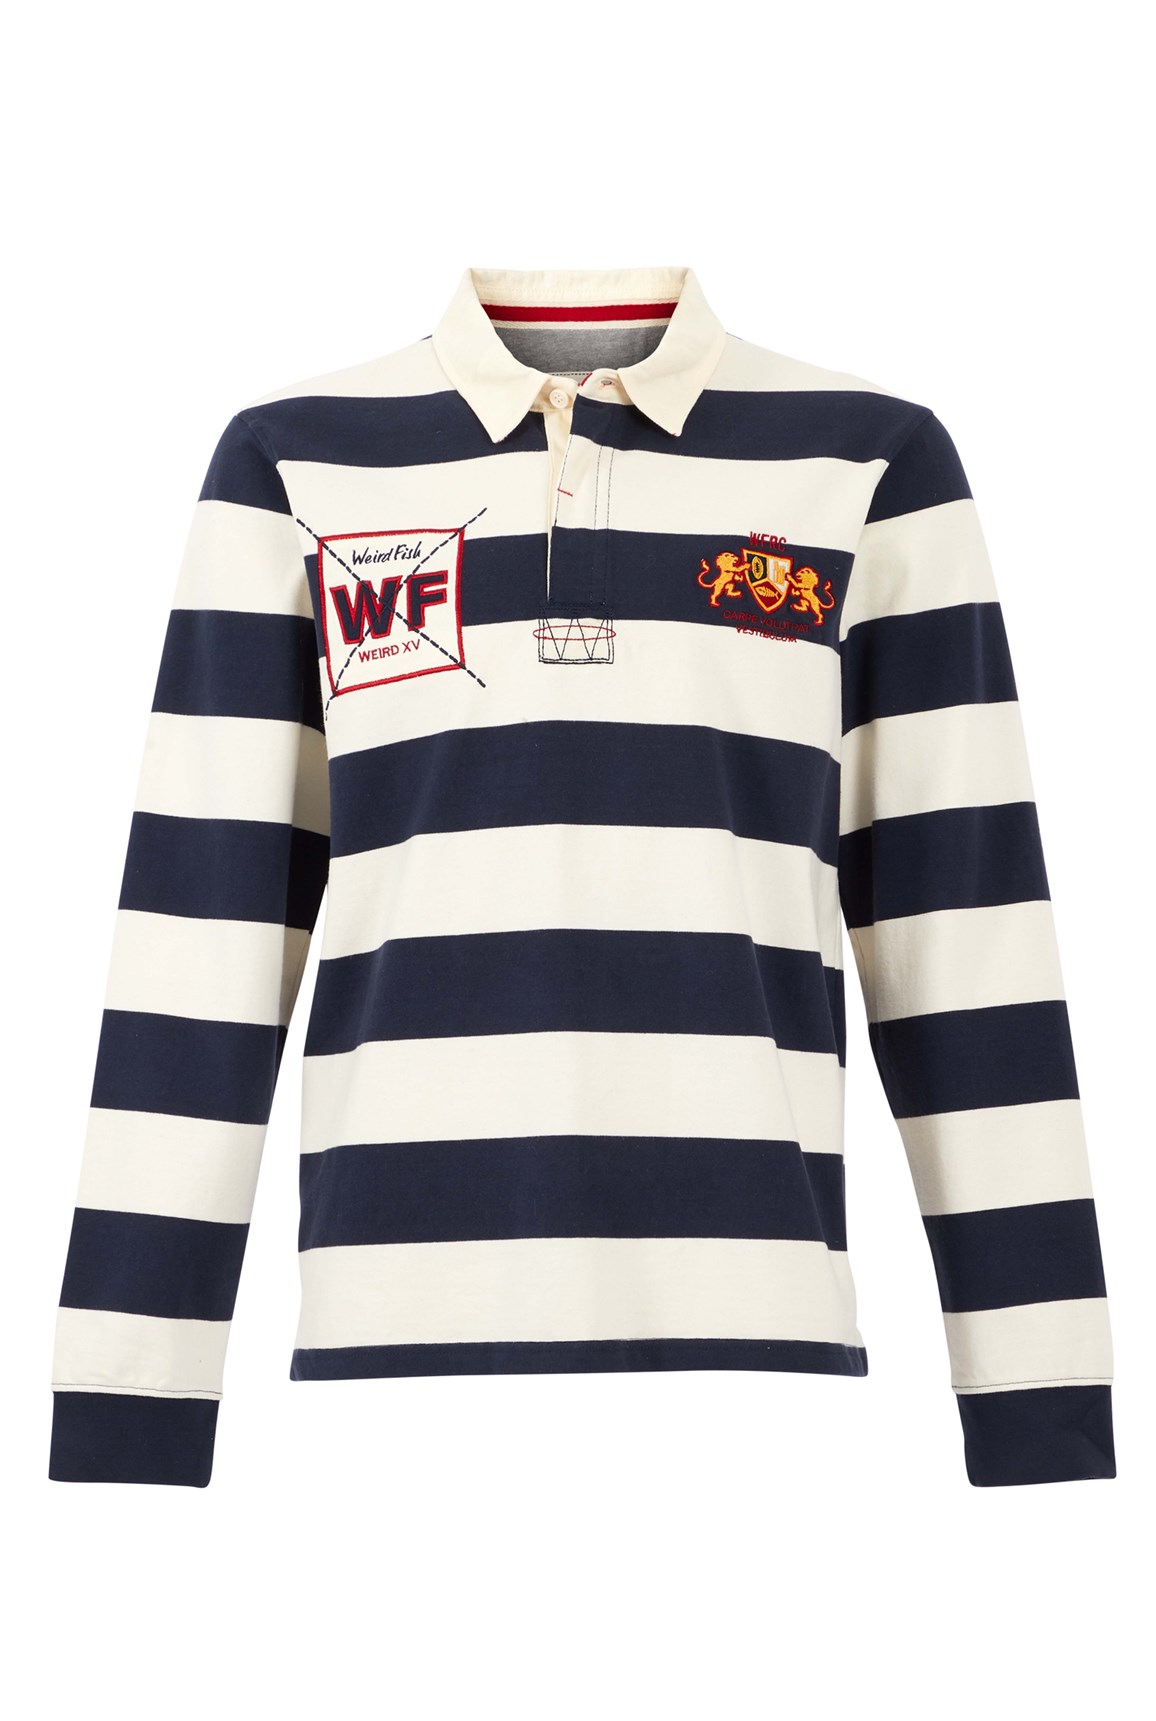 Weird Fish Leigh Organic Cotton Striped Rugby Shirt Navy Size M